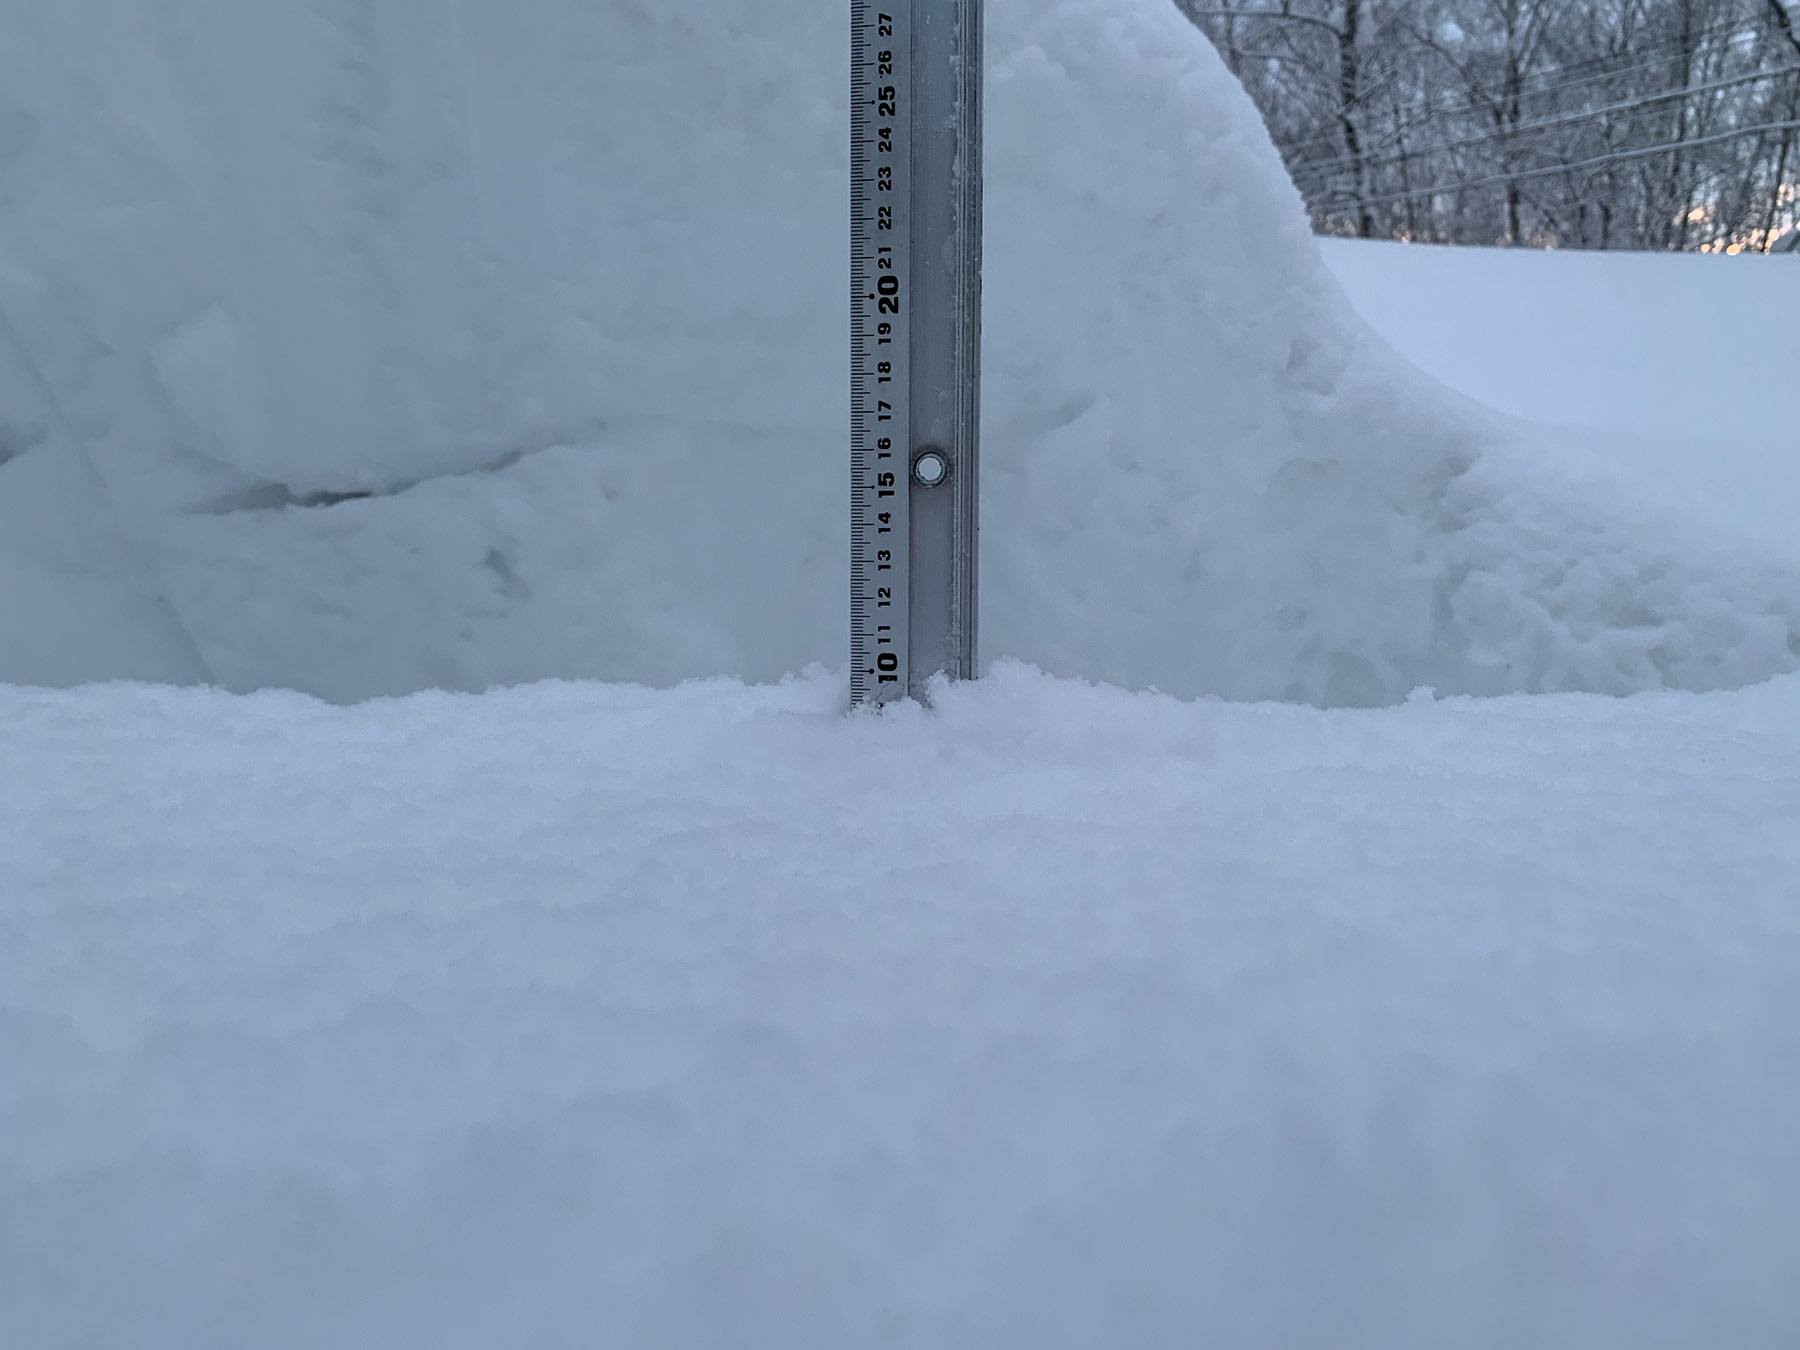 Niseko Snow Report, 15 January 2021